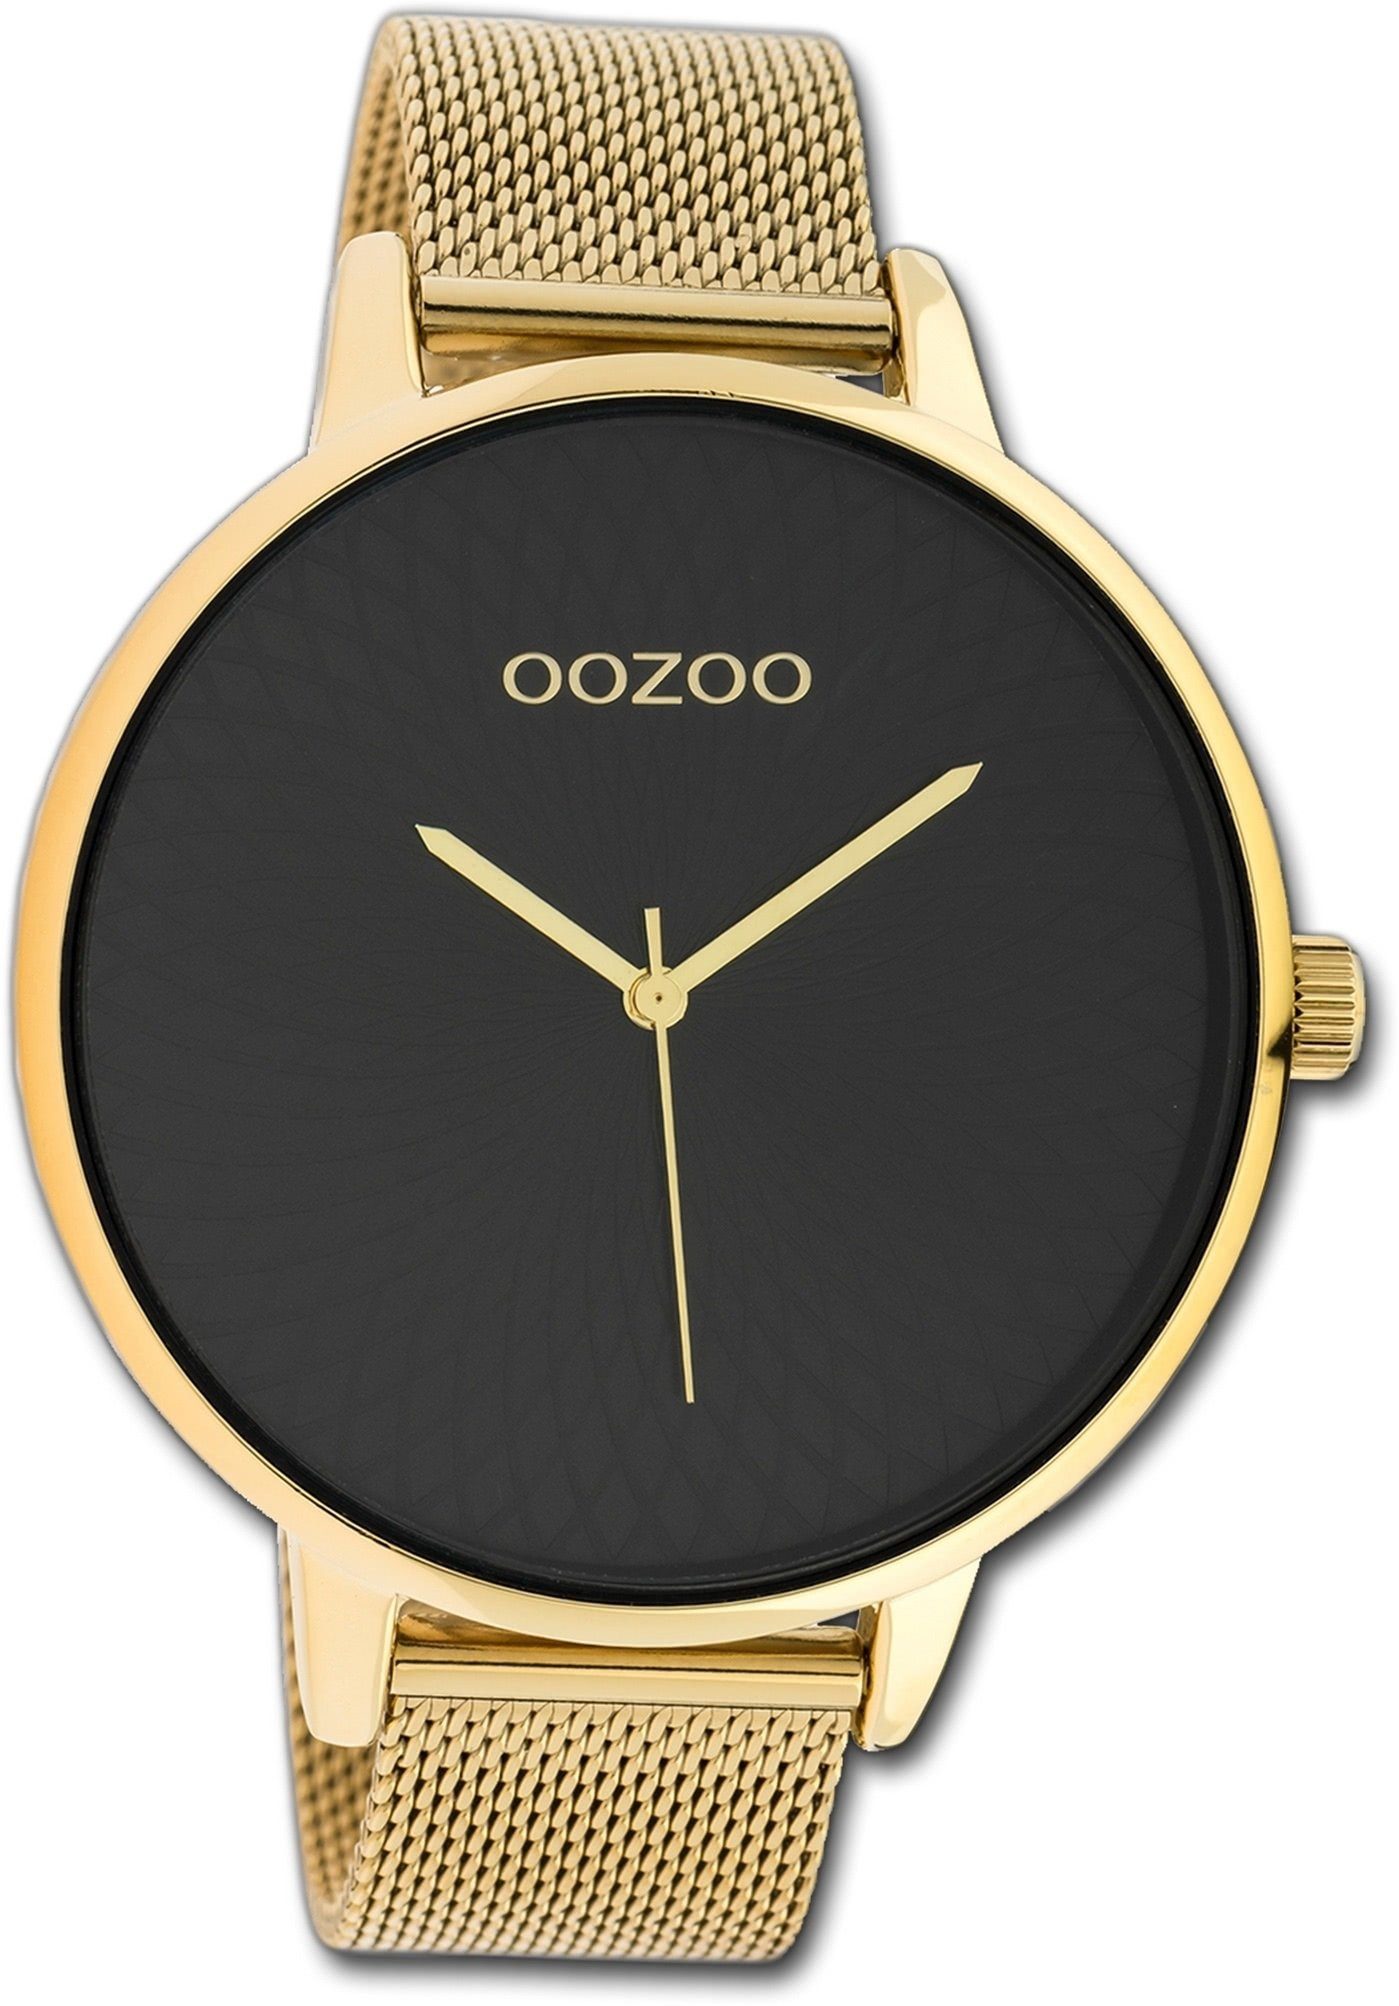 OOZOO Quarzuhr Oozoo Edelstahl Damen Uhr C10553, Damenuhr Edelstahlarmband gold, rundes Gehäuse, extra groß (ca. 48mm)